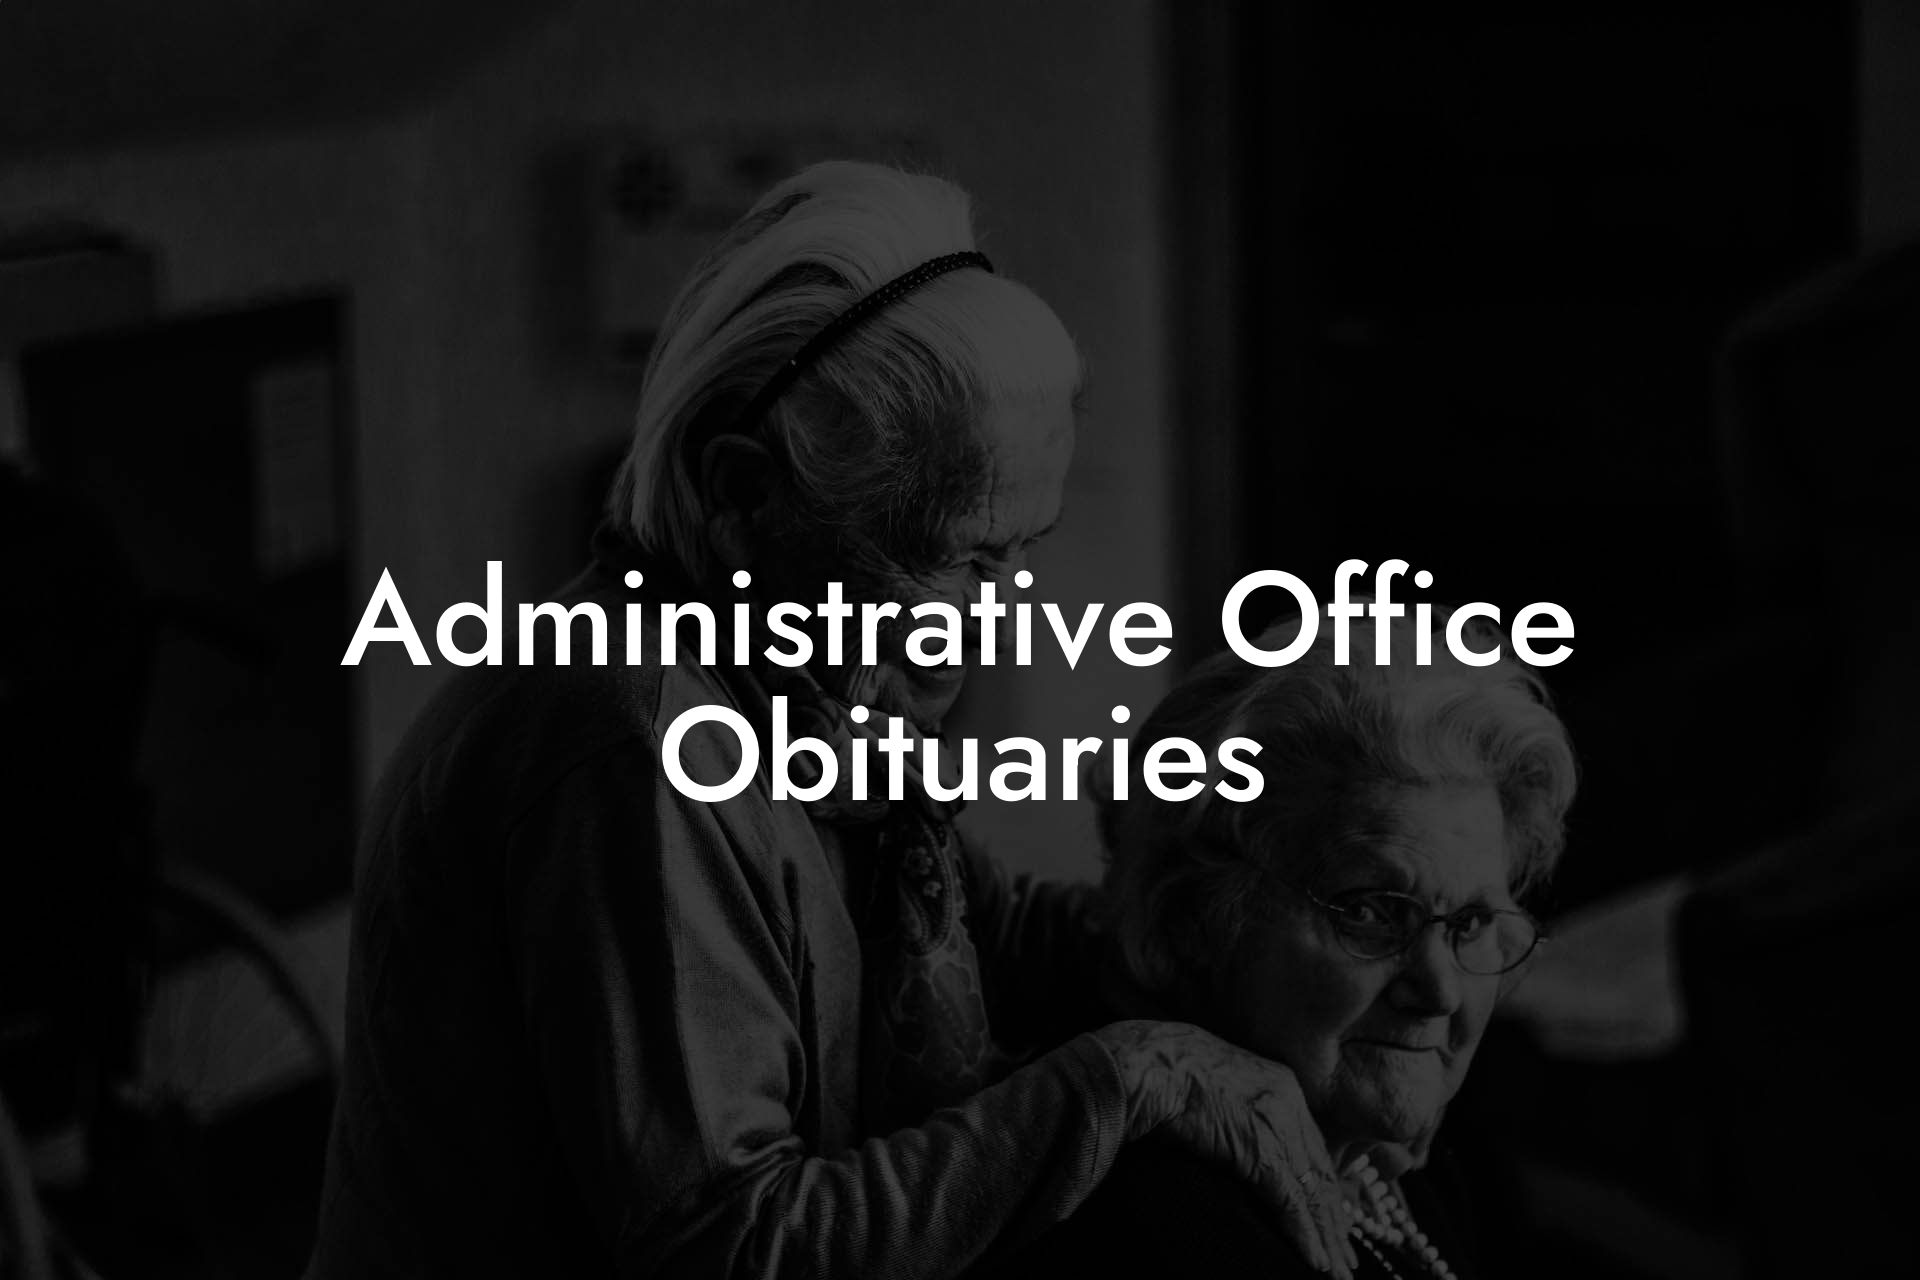 Administrative Office Obituaries